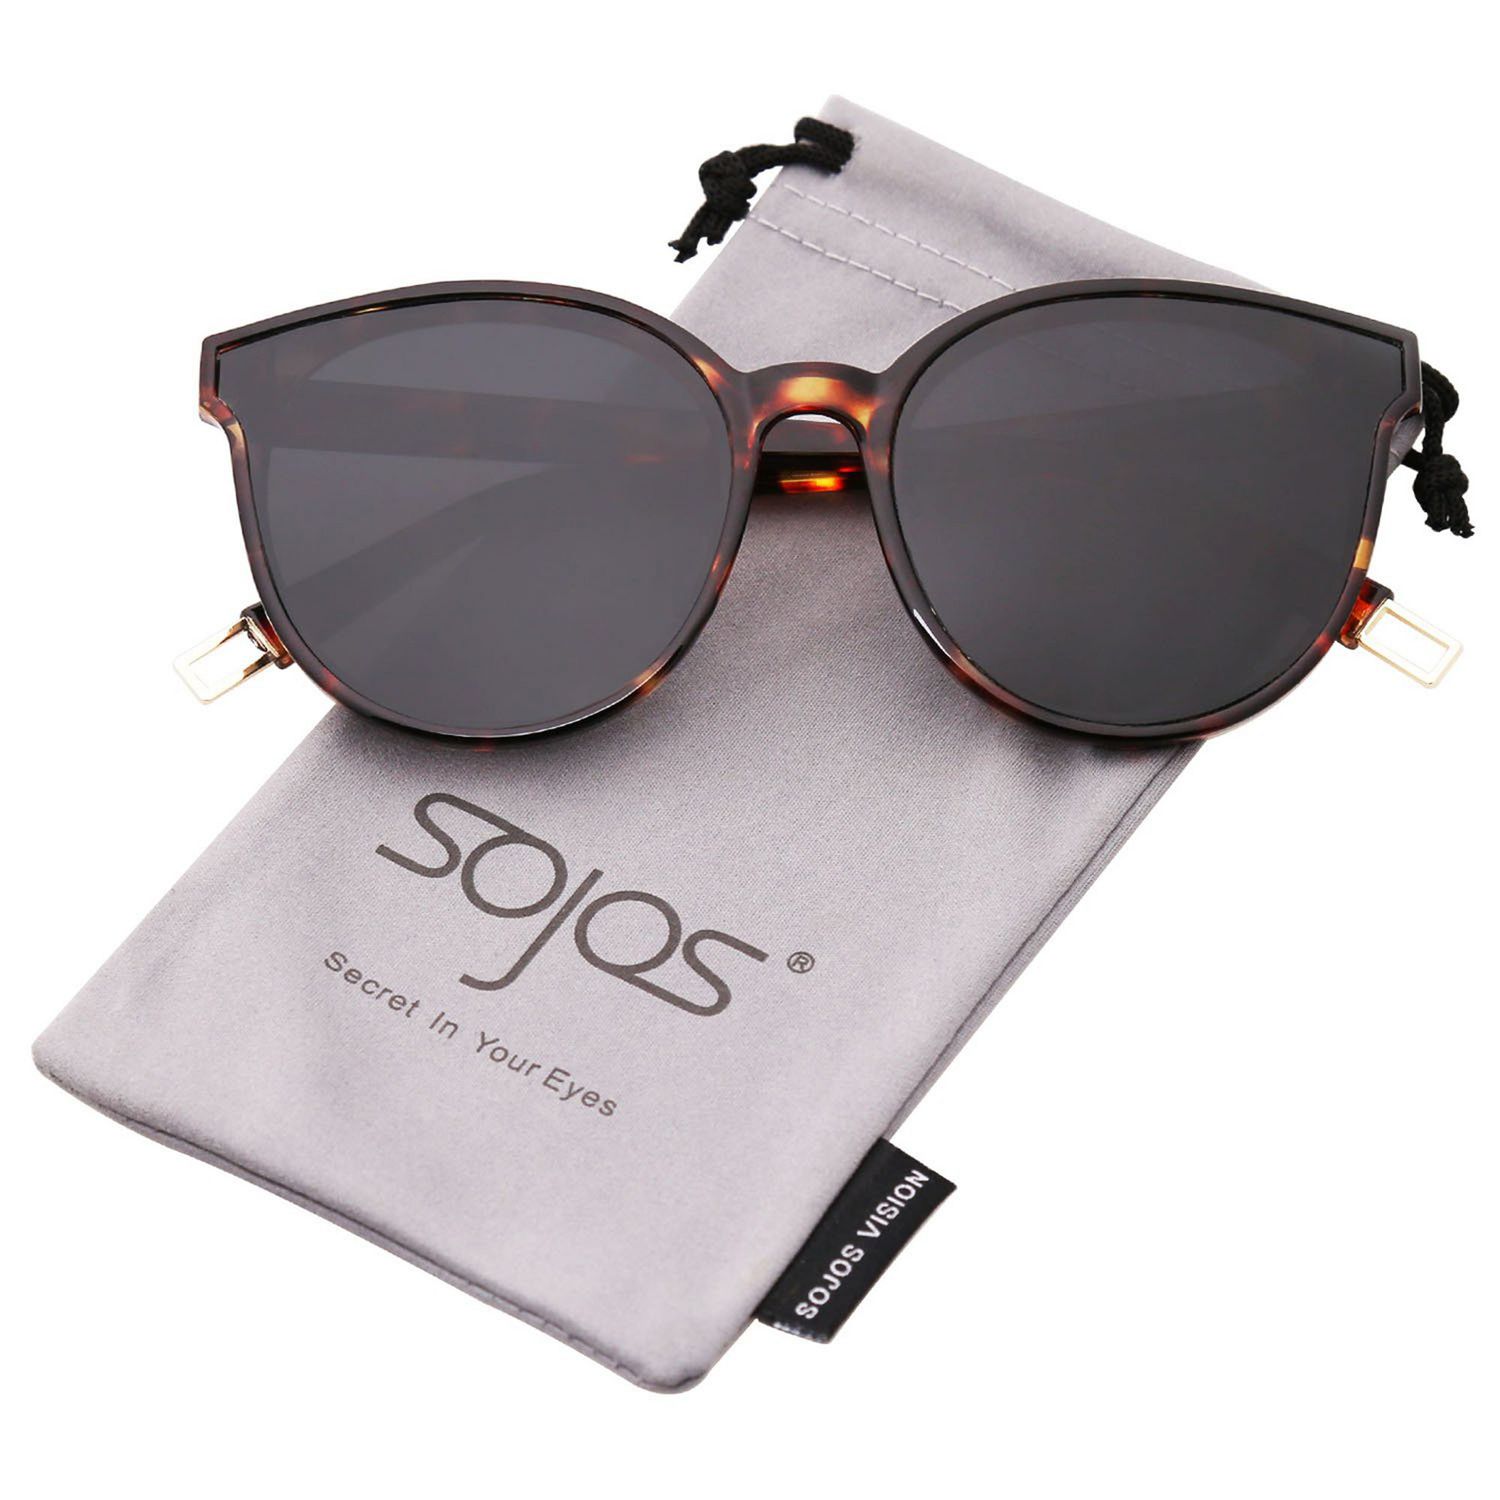 Sojos Vision tortoiseshell sunglasses